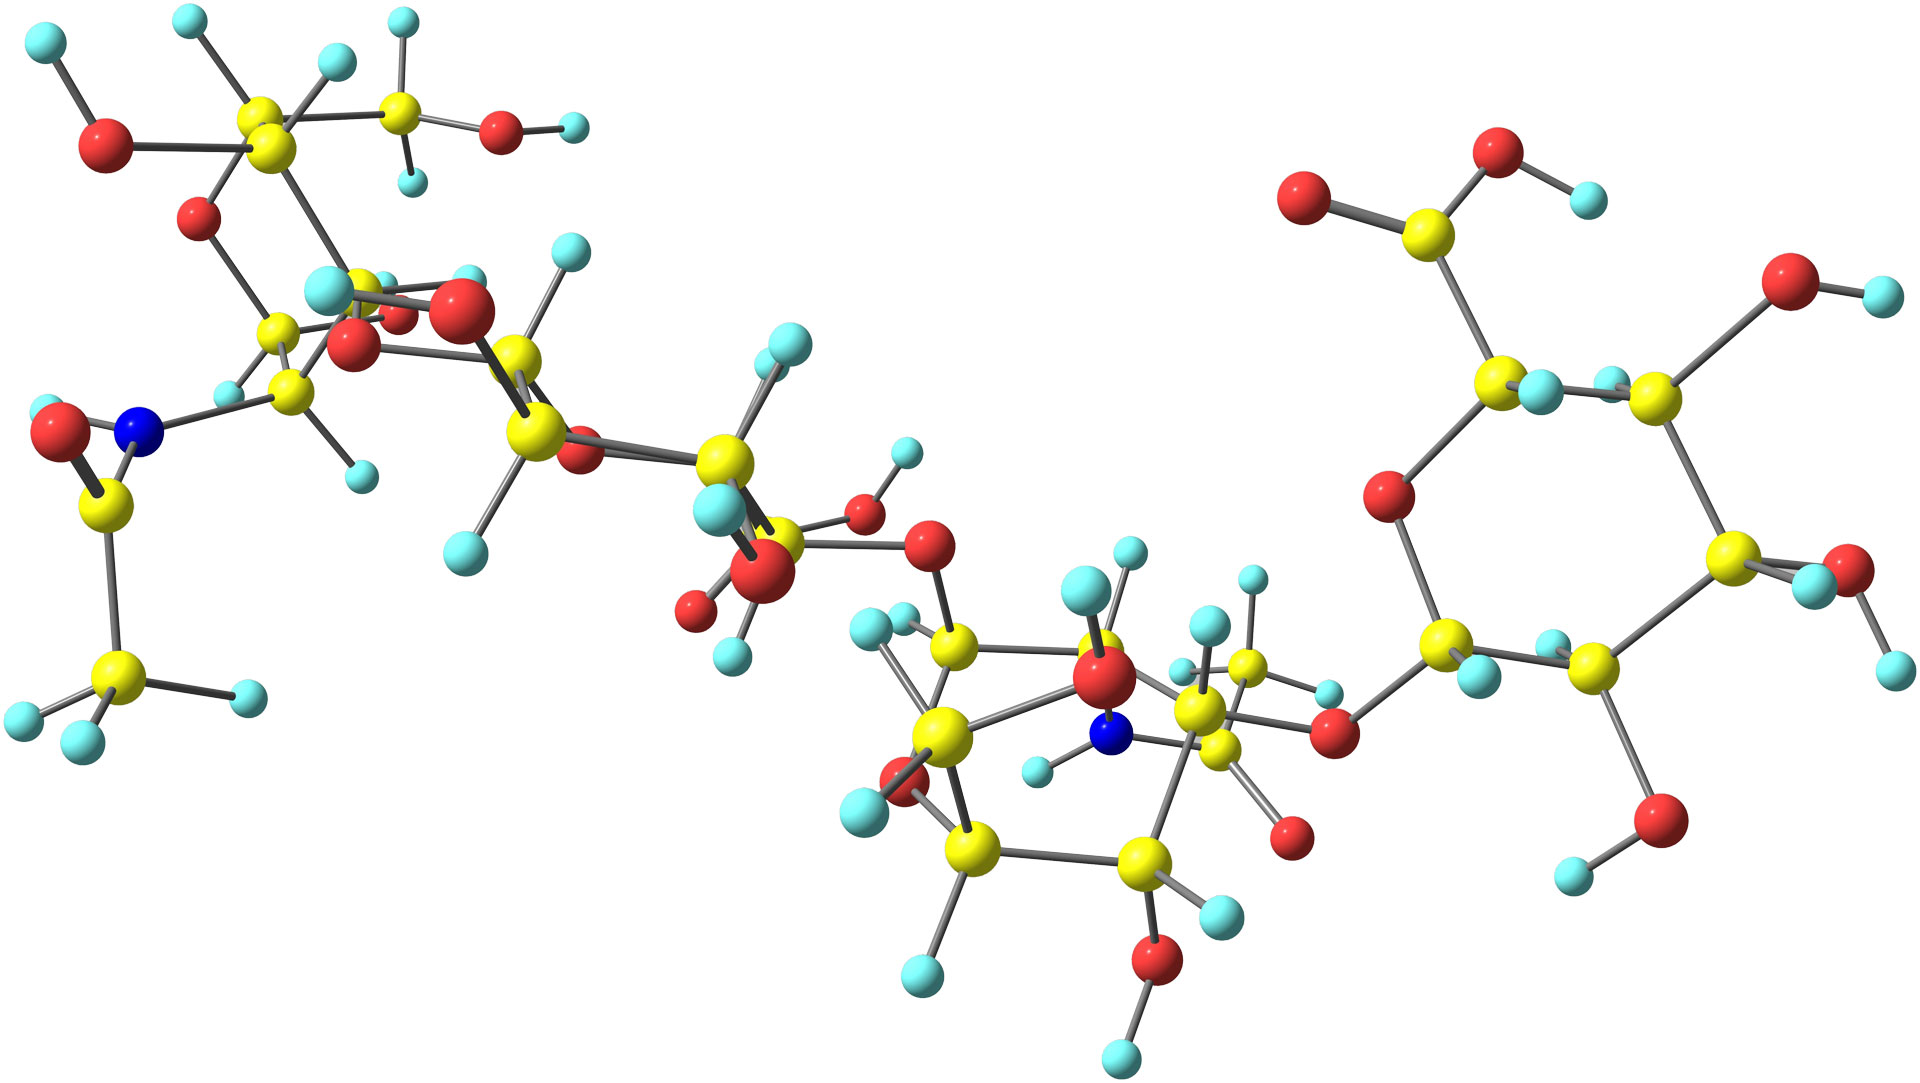 Hyaluronic Acid Molecule